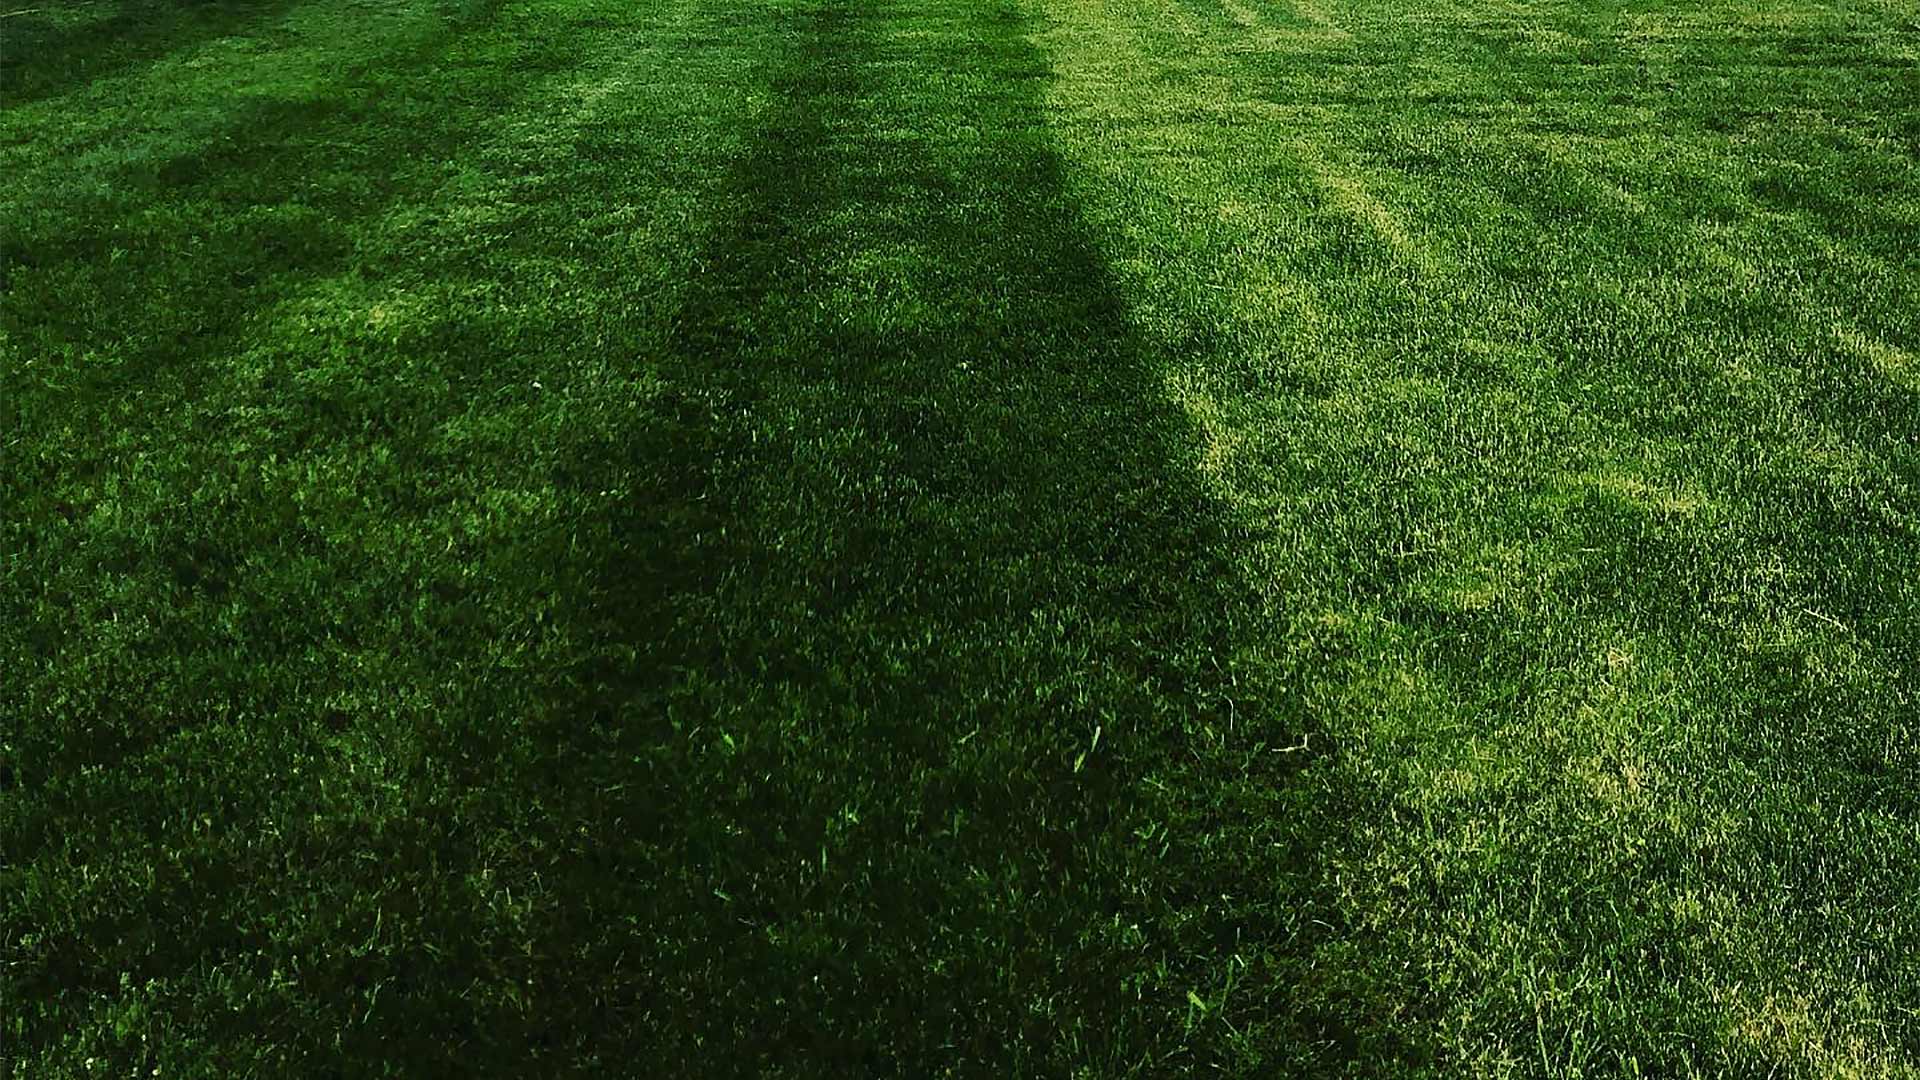 Green Bay, Wisconsin home with dark green, fertilized lawn grass.